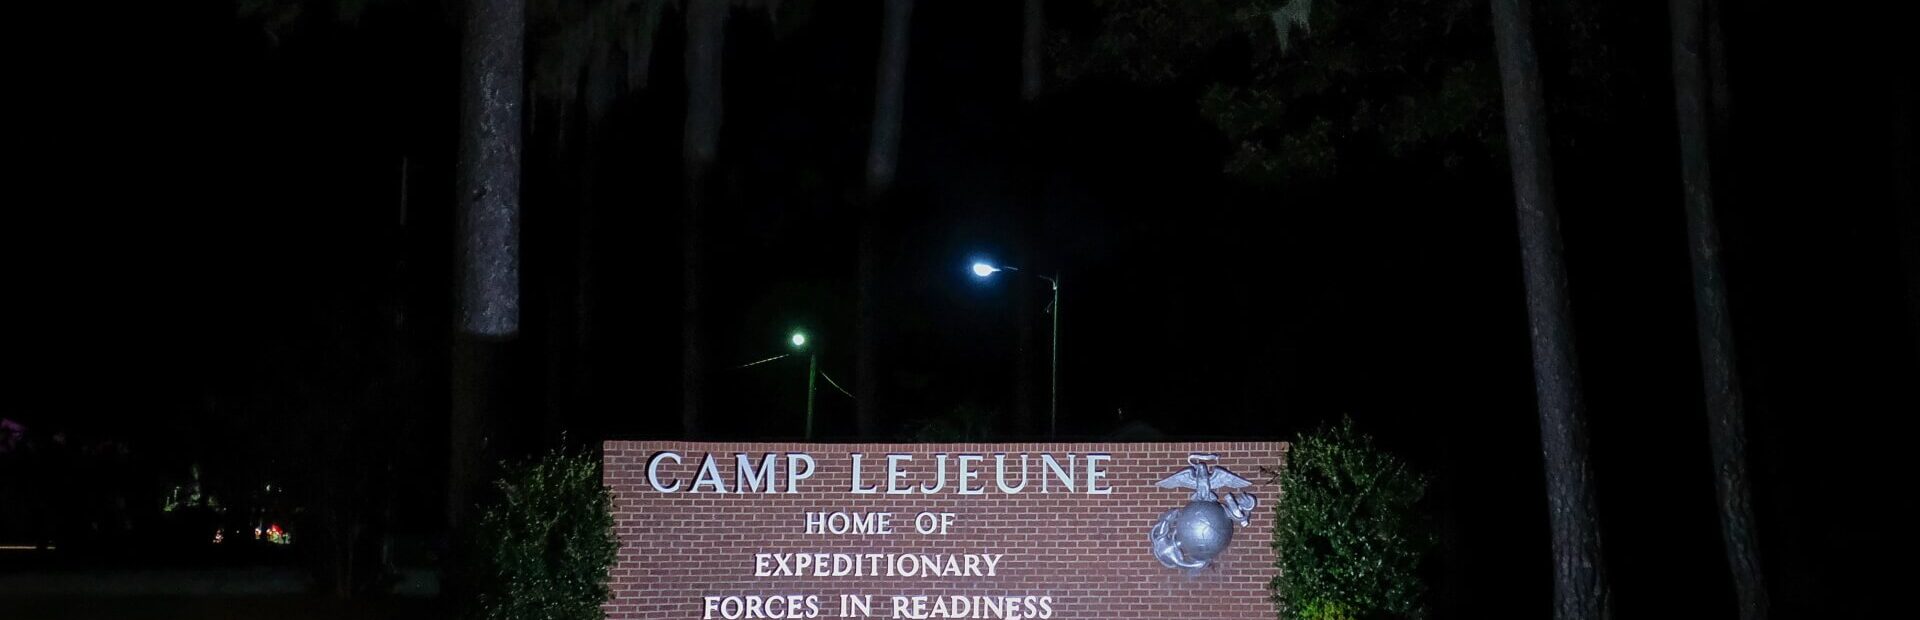 Camp Lejeune Marine Base sign at night